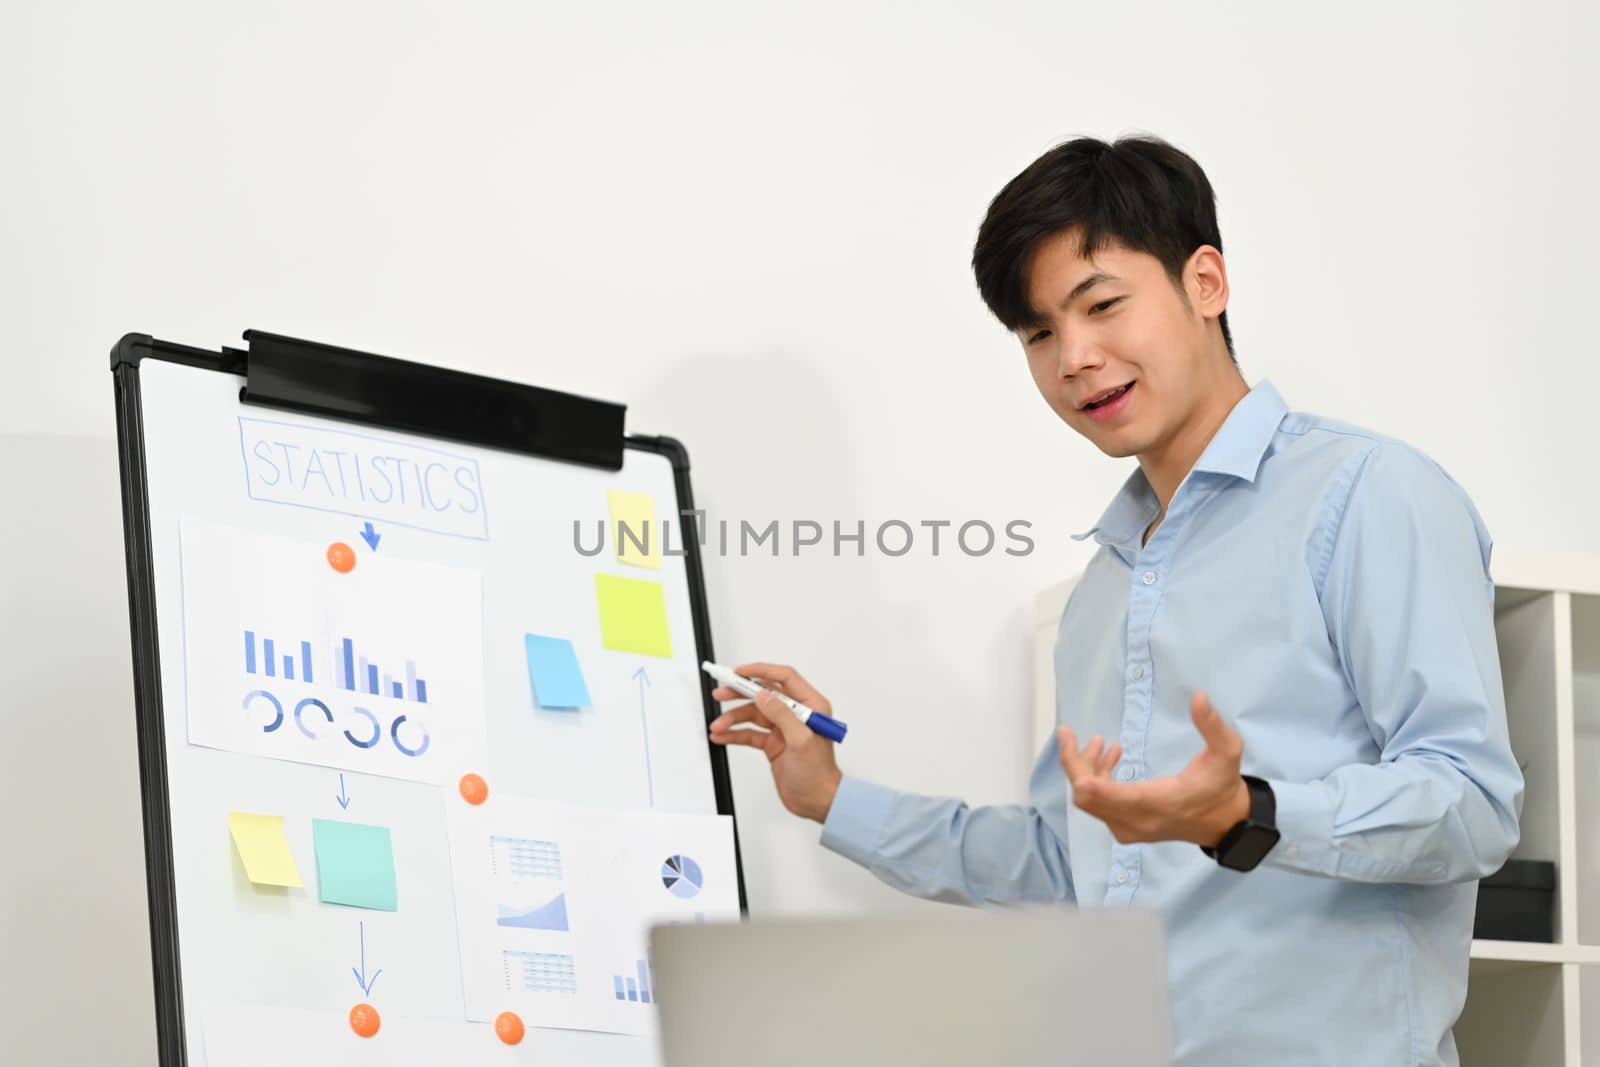 Smiling start up businessman explaining business data on whiteboard during online conference via laptop computer.